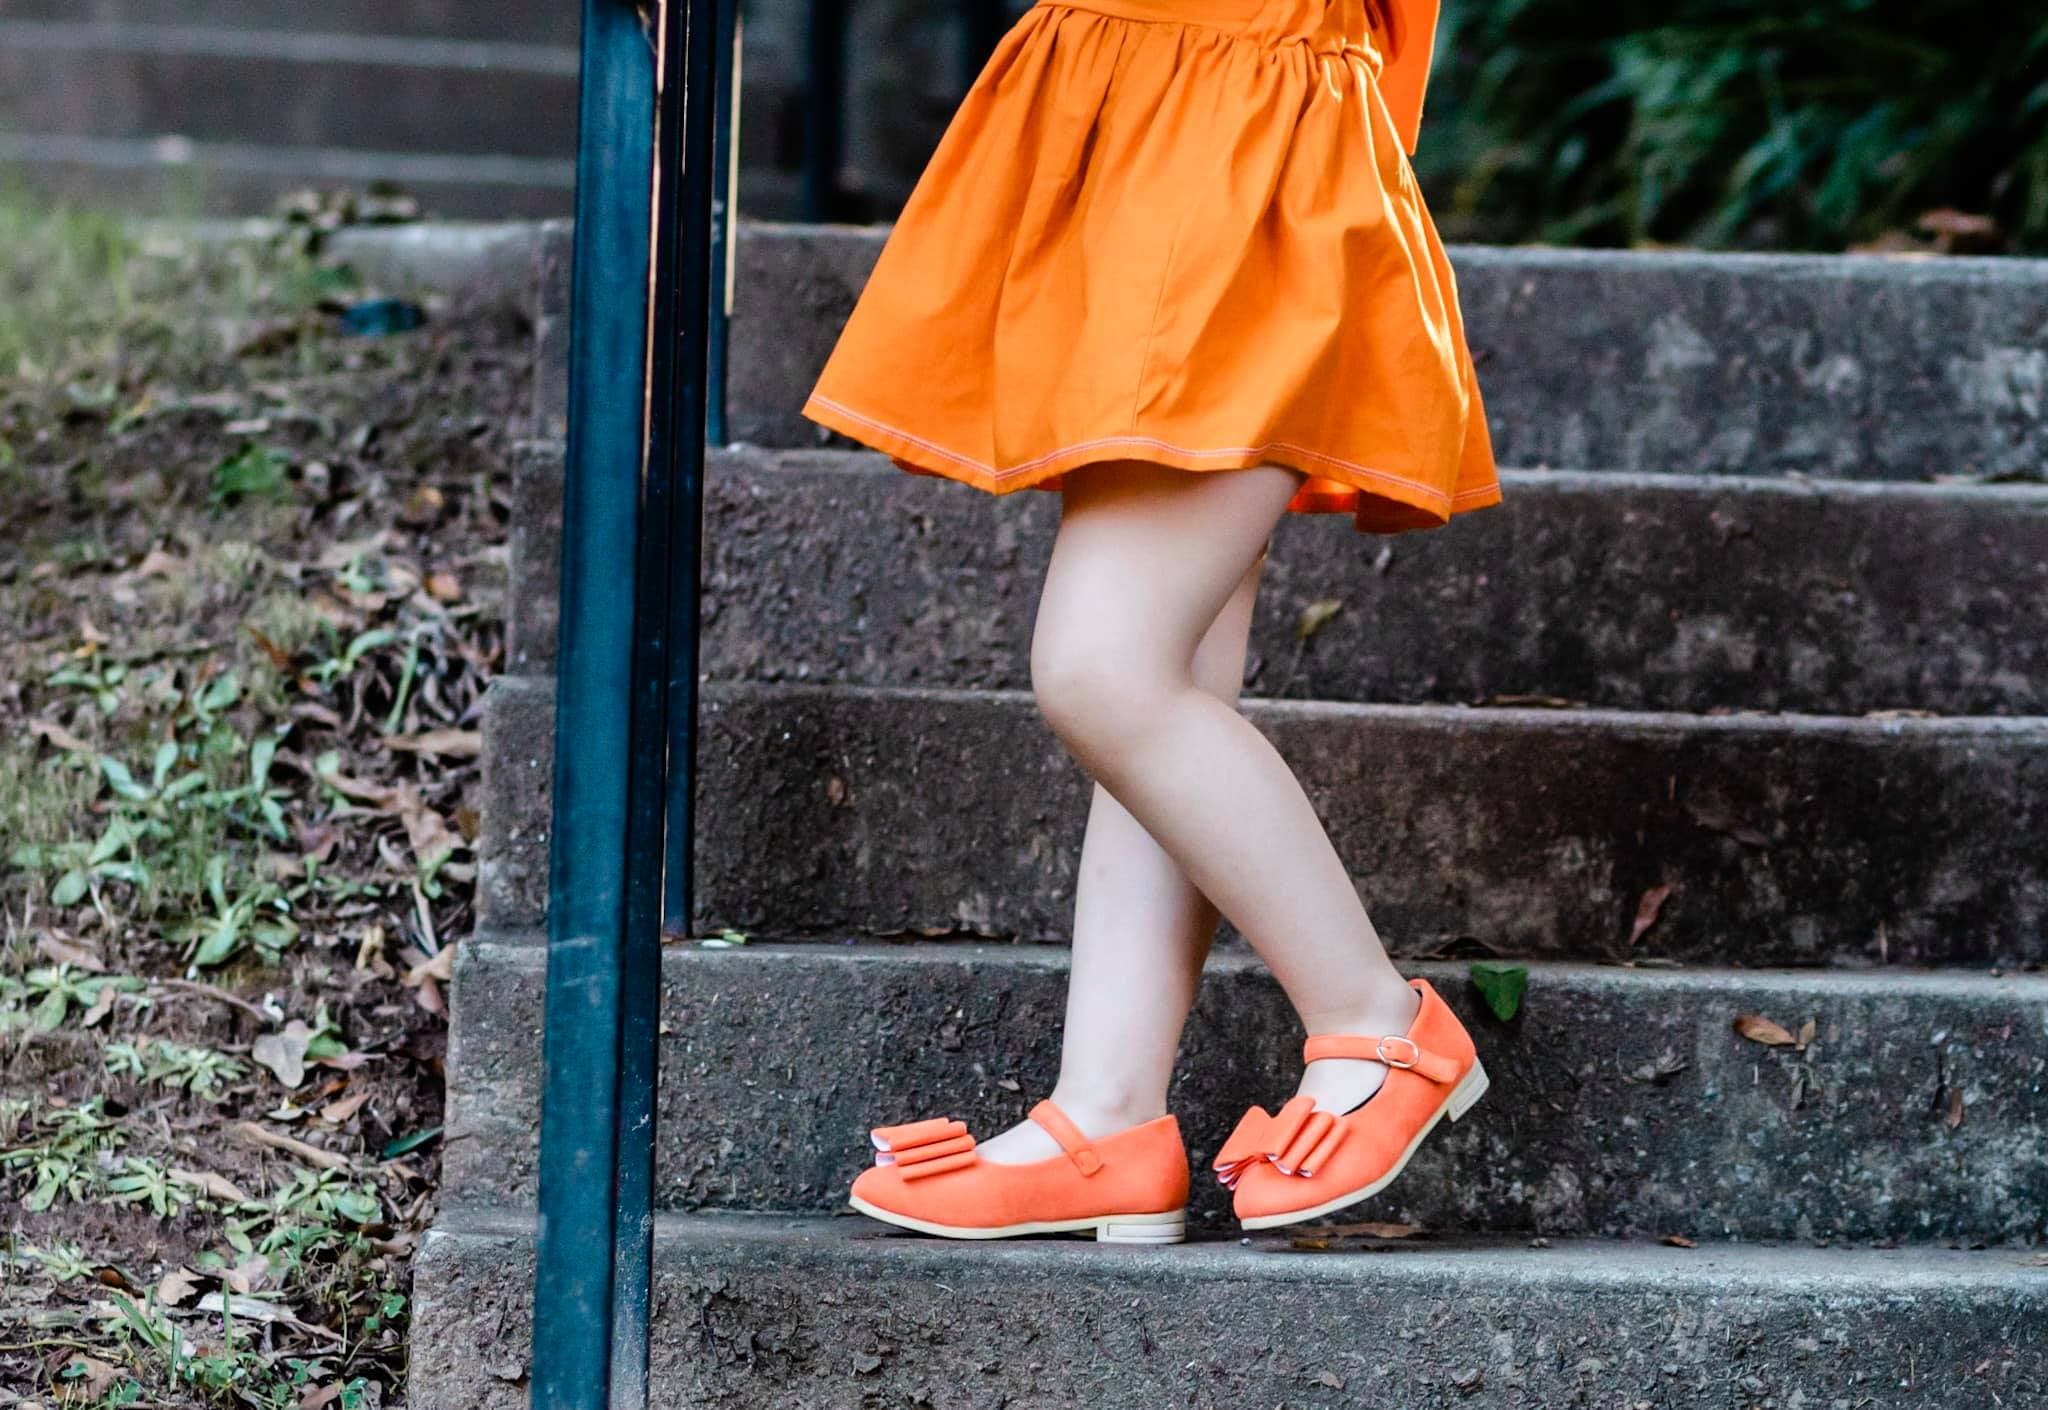 [Orange Suede] Bow Shoes